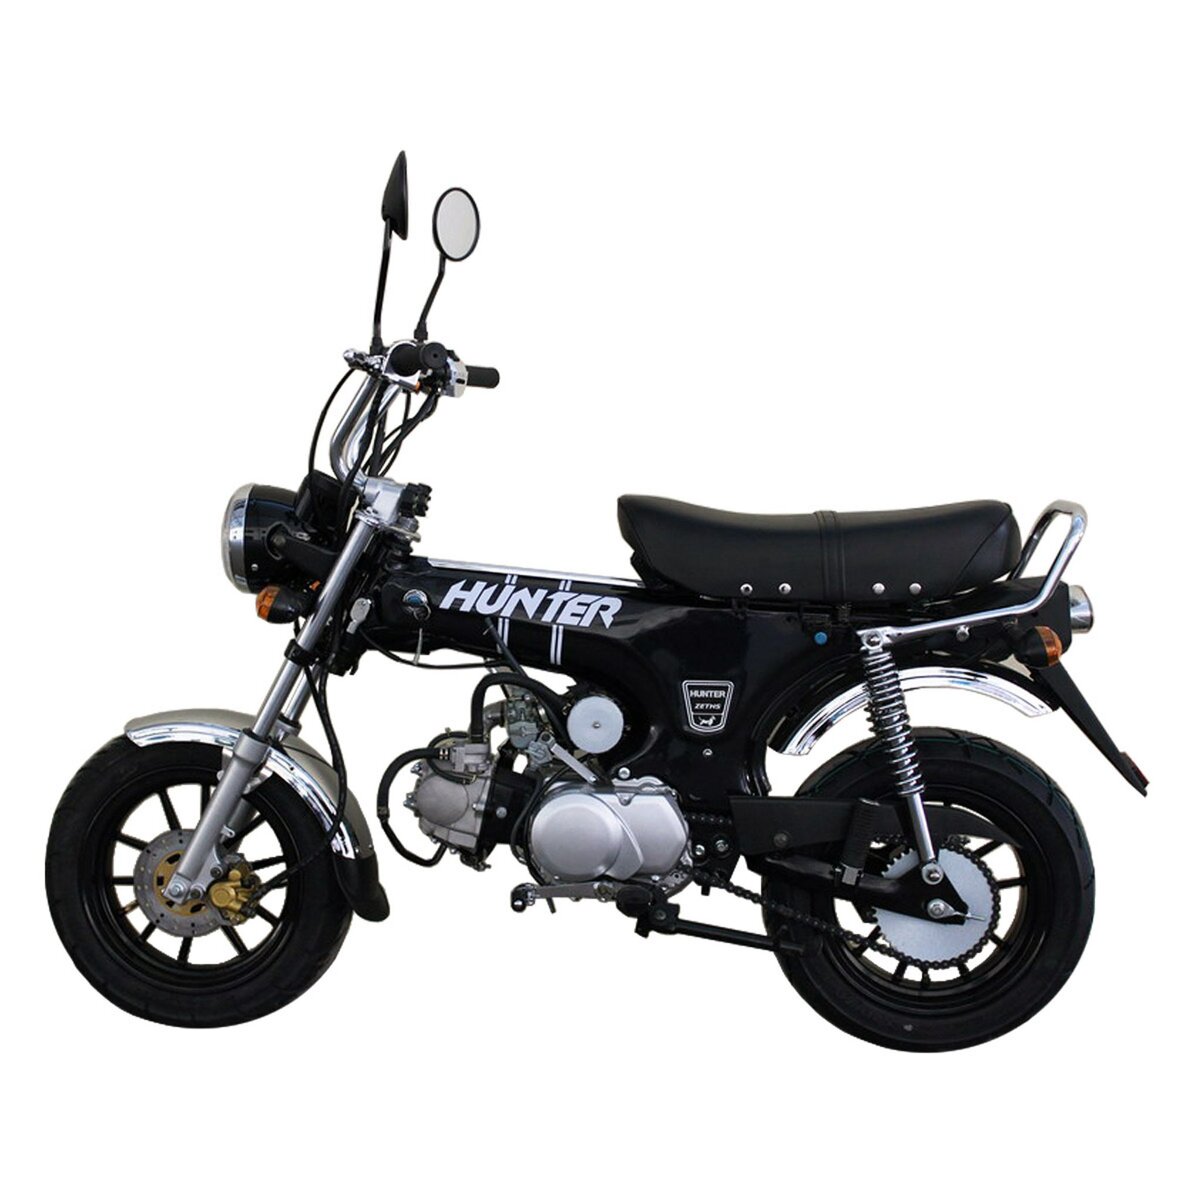 F.S.M Mini moto type "Dax" 50cc 4 Temps 